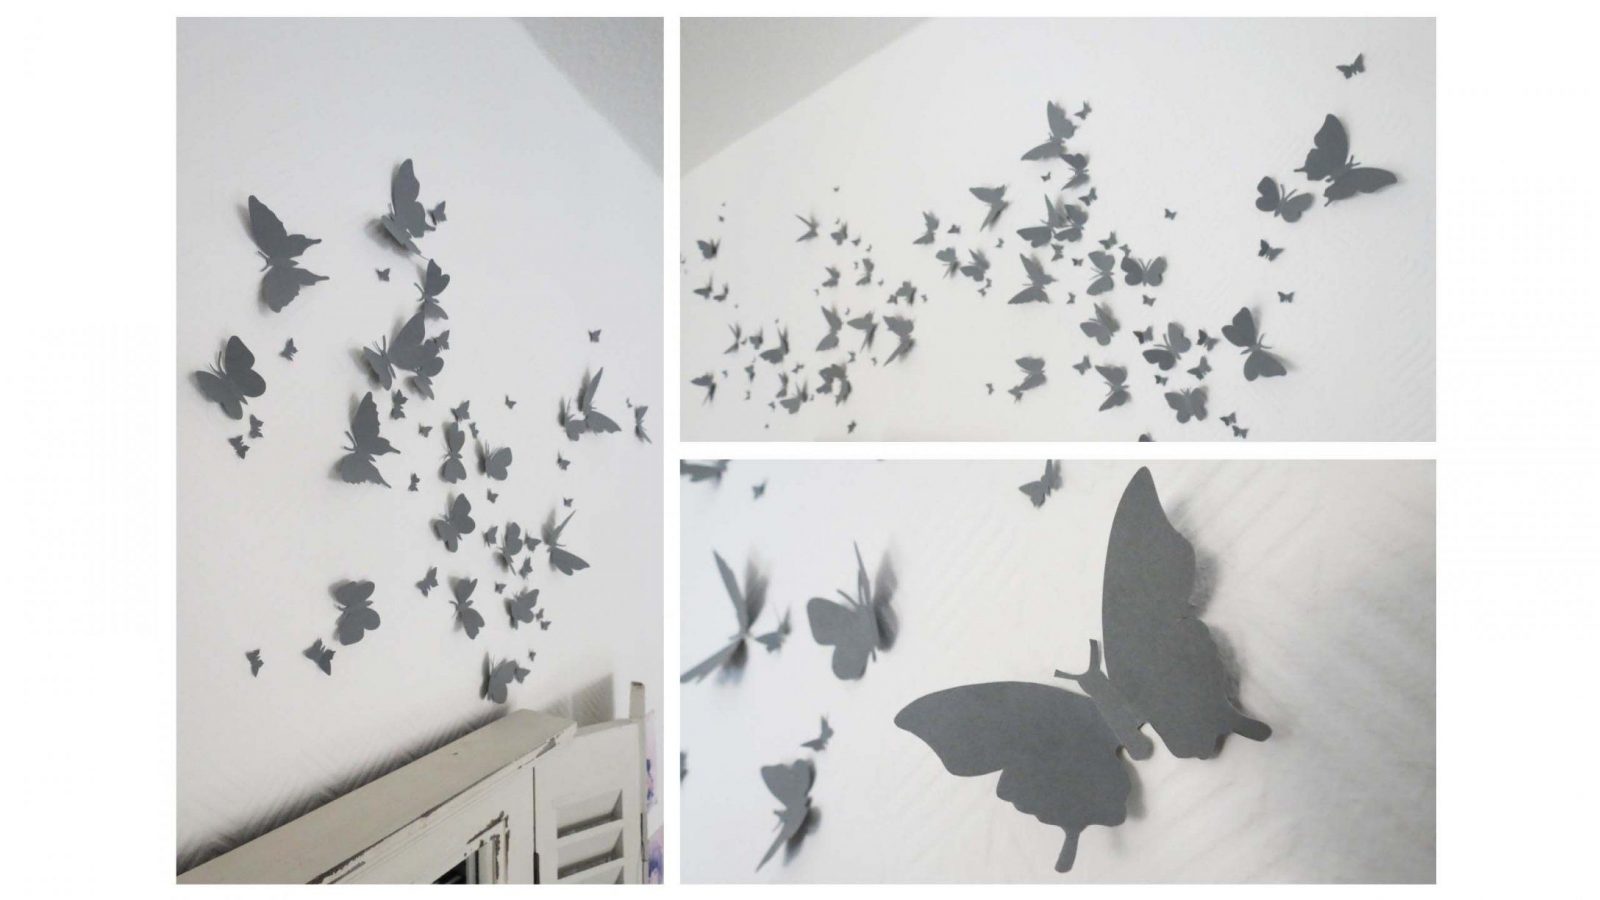 Wanddeko Aus Schmetterlingen * Butterfly Wall Decor [Eng Sub]  Youtube von Schmetterlinge Wanddeko Selber Machen Bild